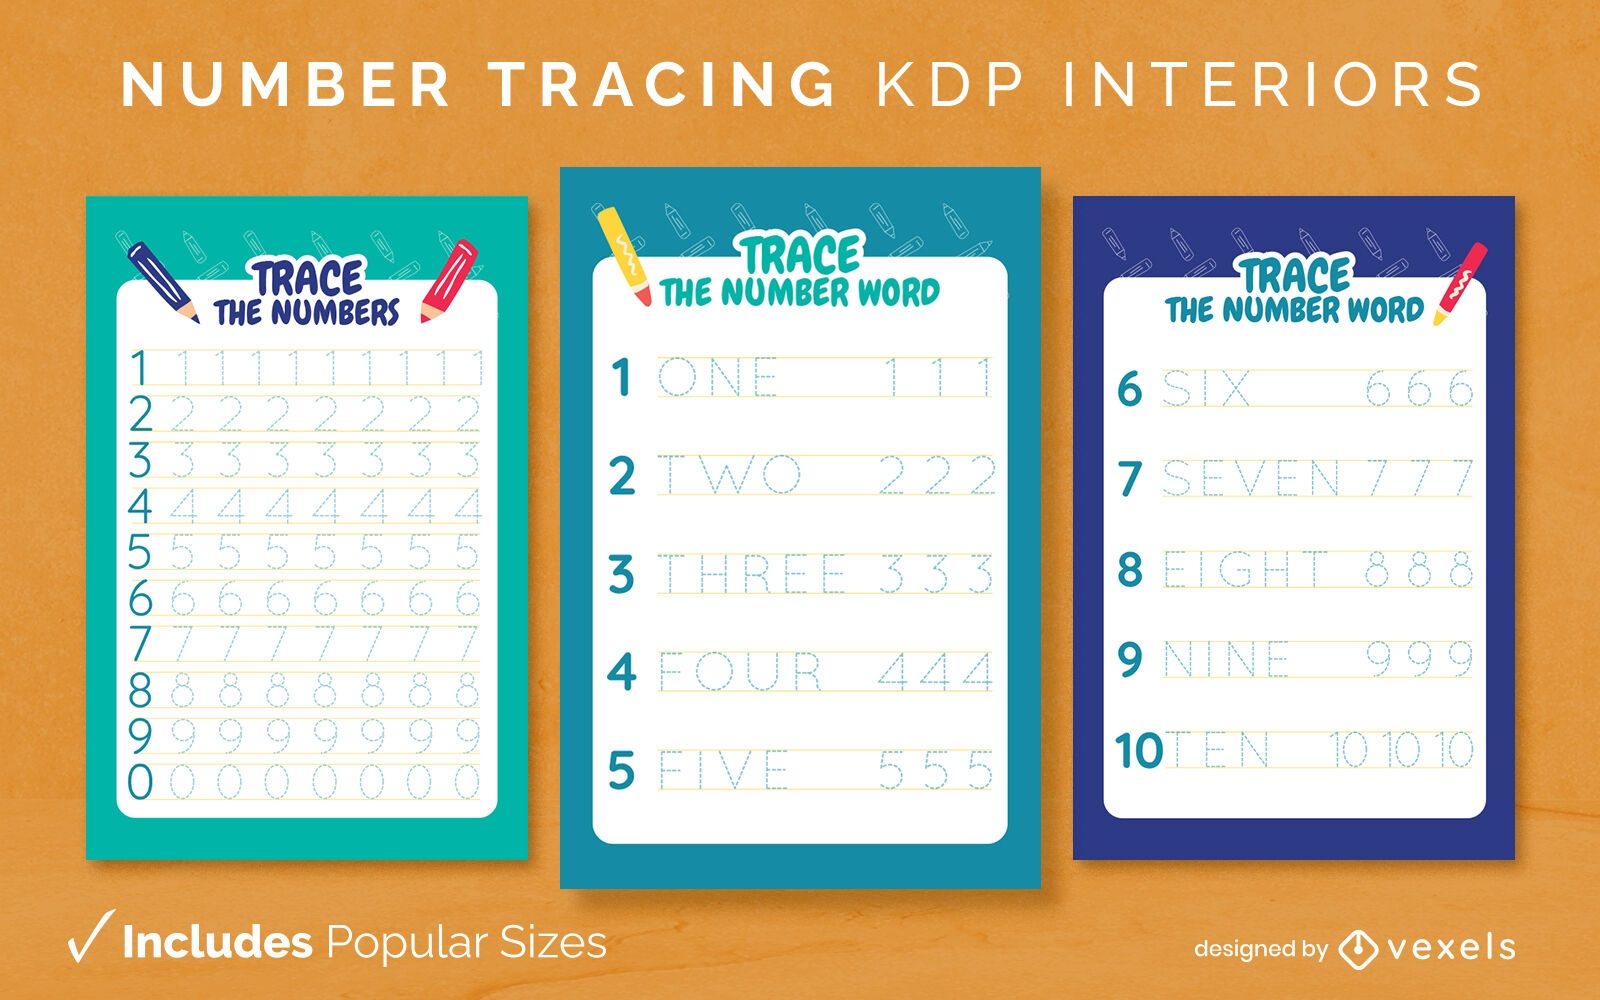 Number tracing kdp interior design pages